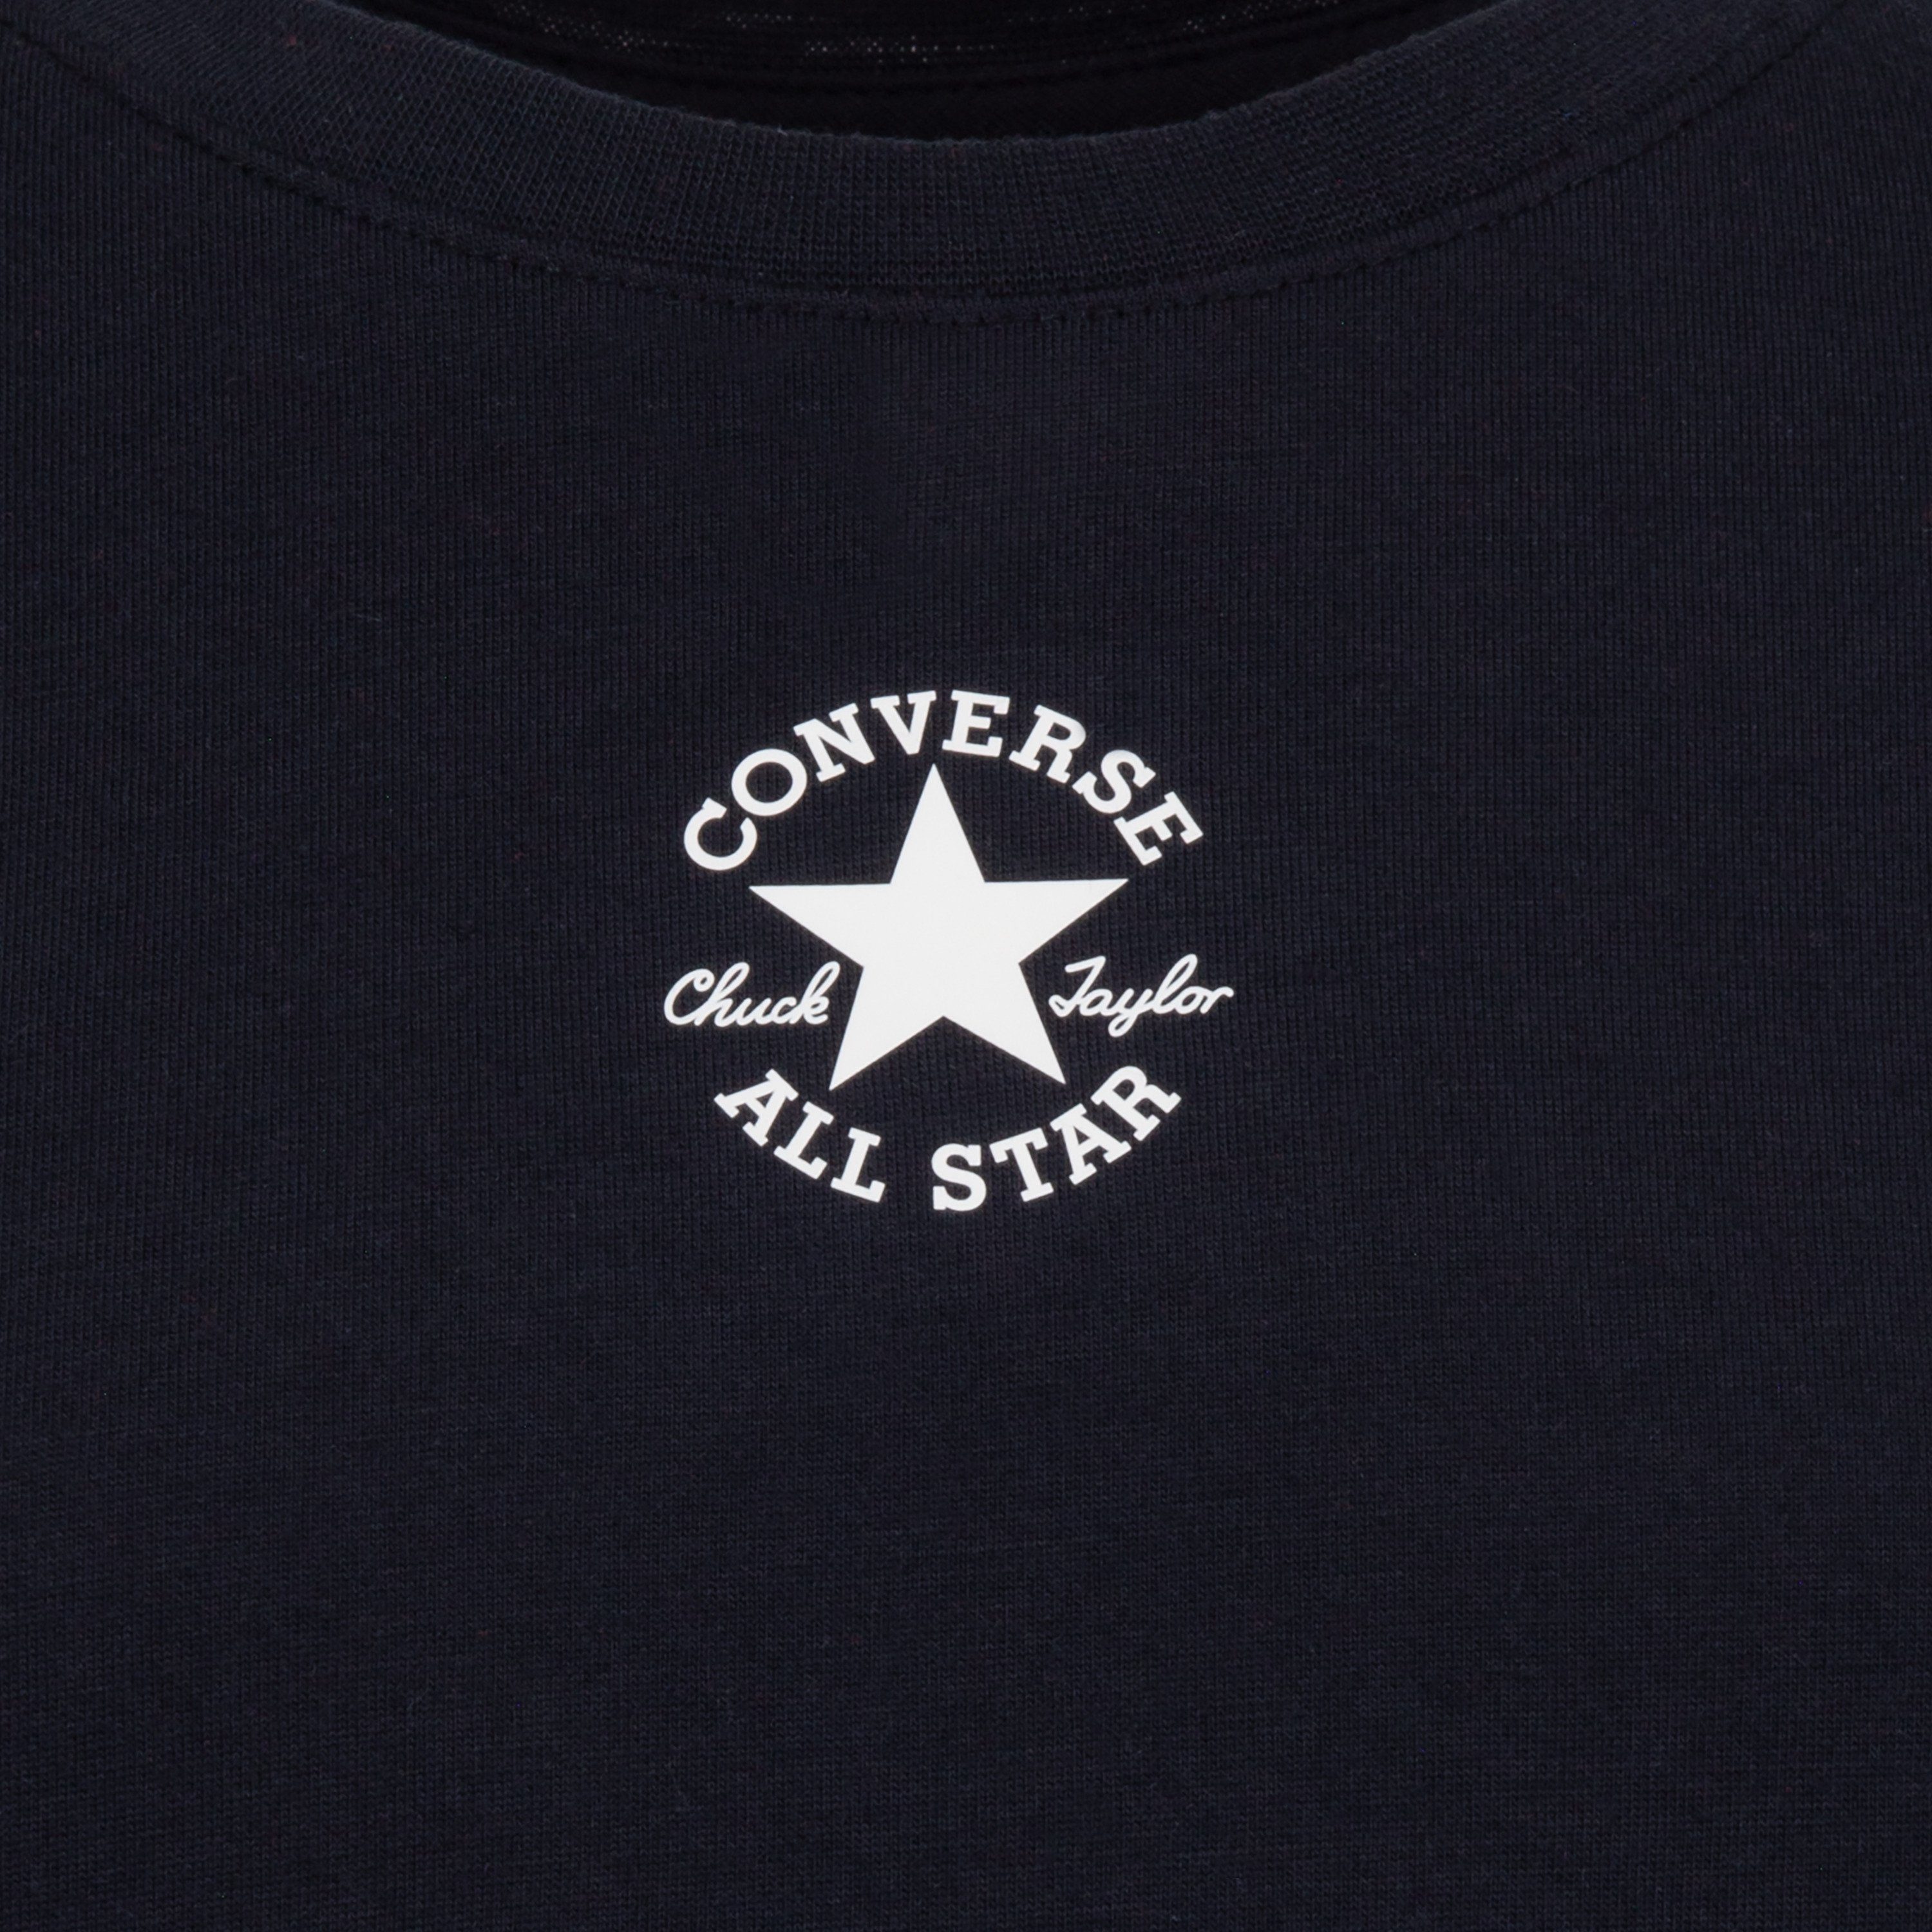 Converse T-Shirt - T-SHIRT CHUCK für PATCH BOXY Kinder BLACK